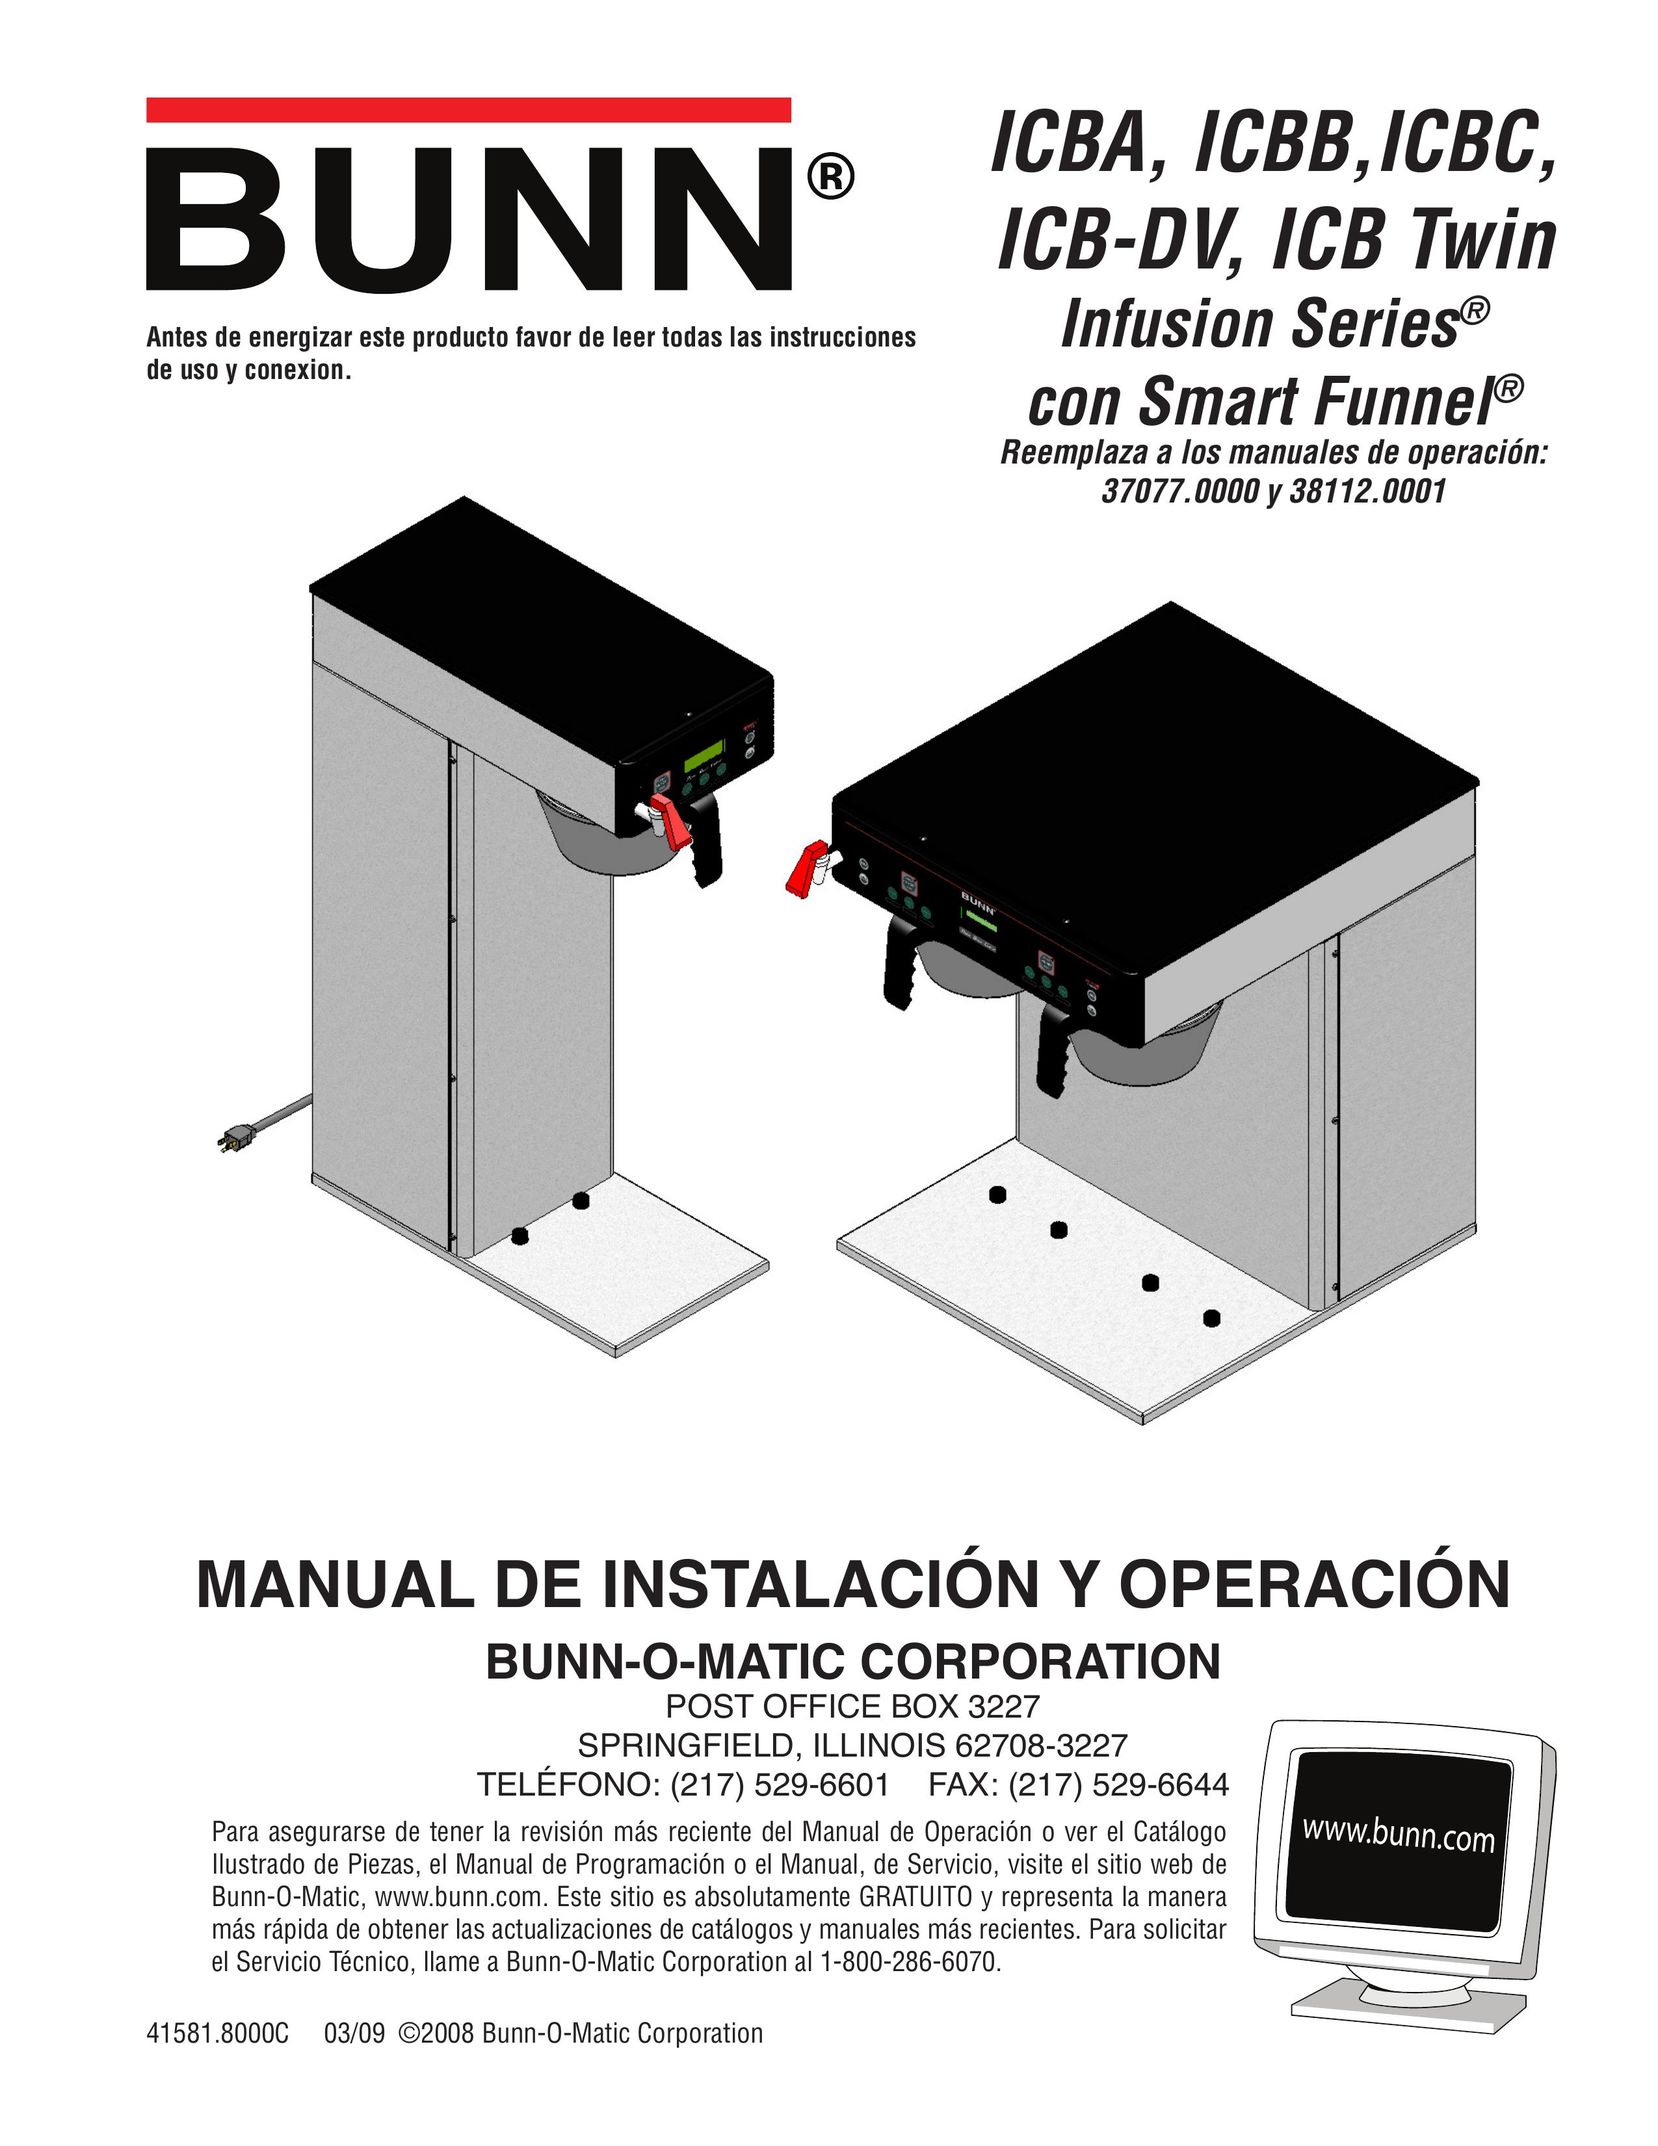 Bunn ICB-DV Espresso Maker User Manual